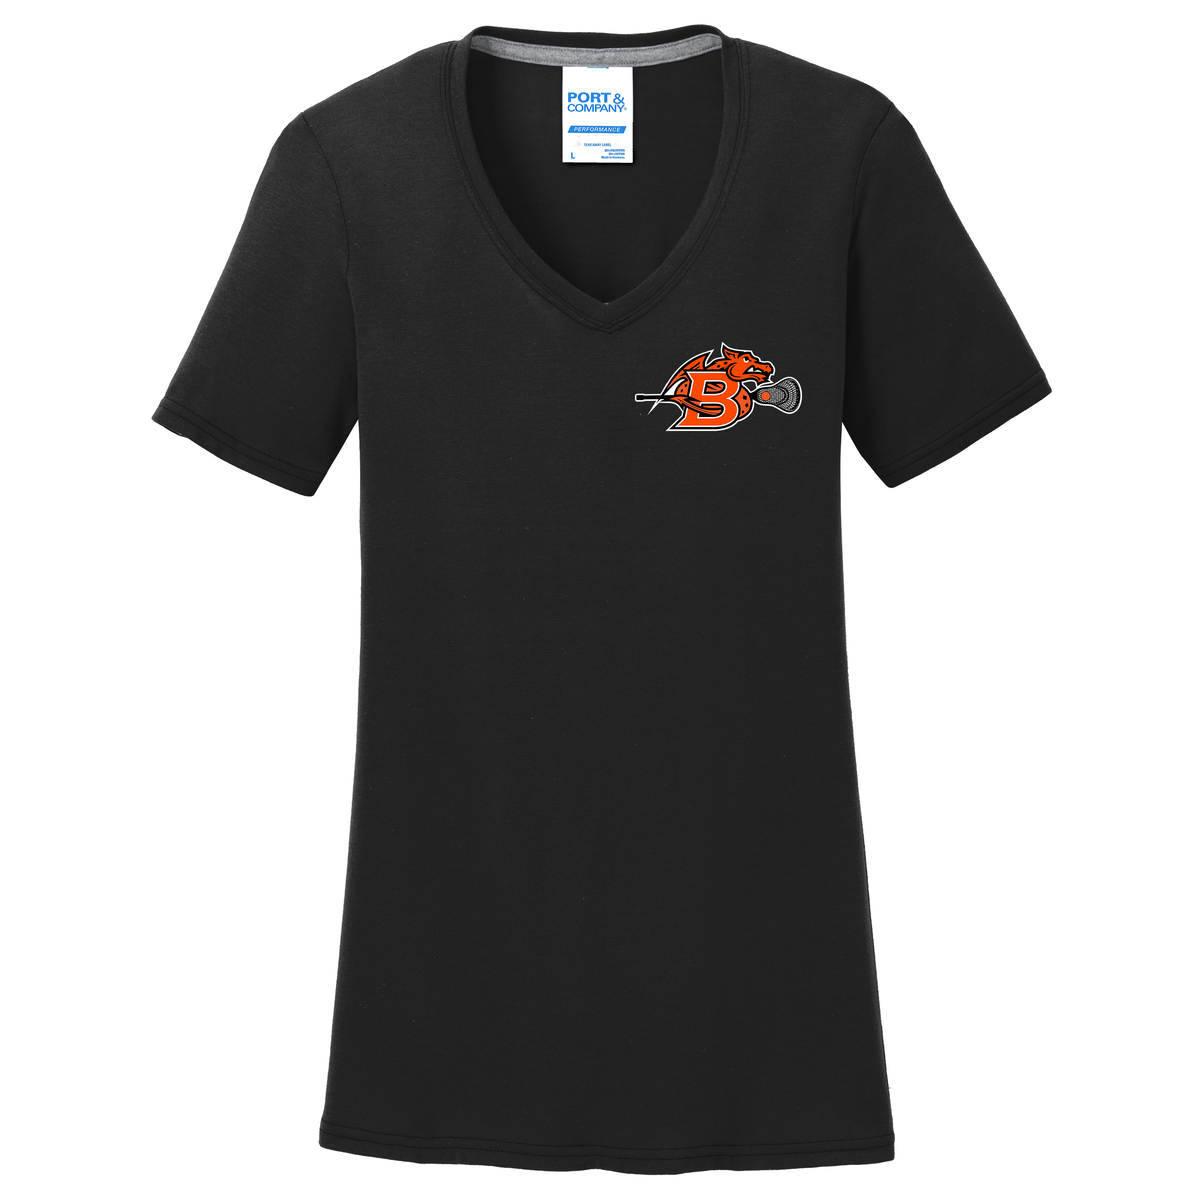 Brunswick Dragons Lacrosse Women's T-Shirt